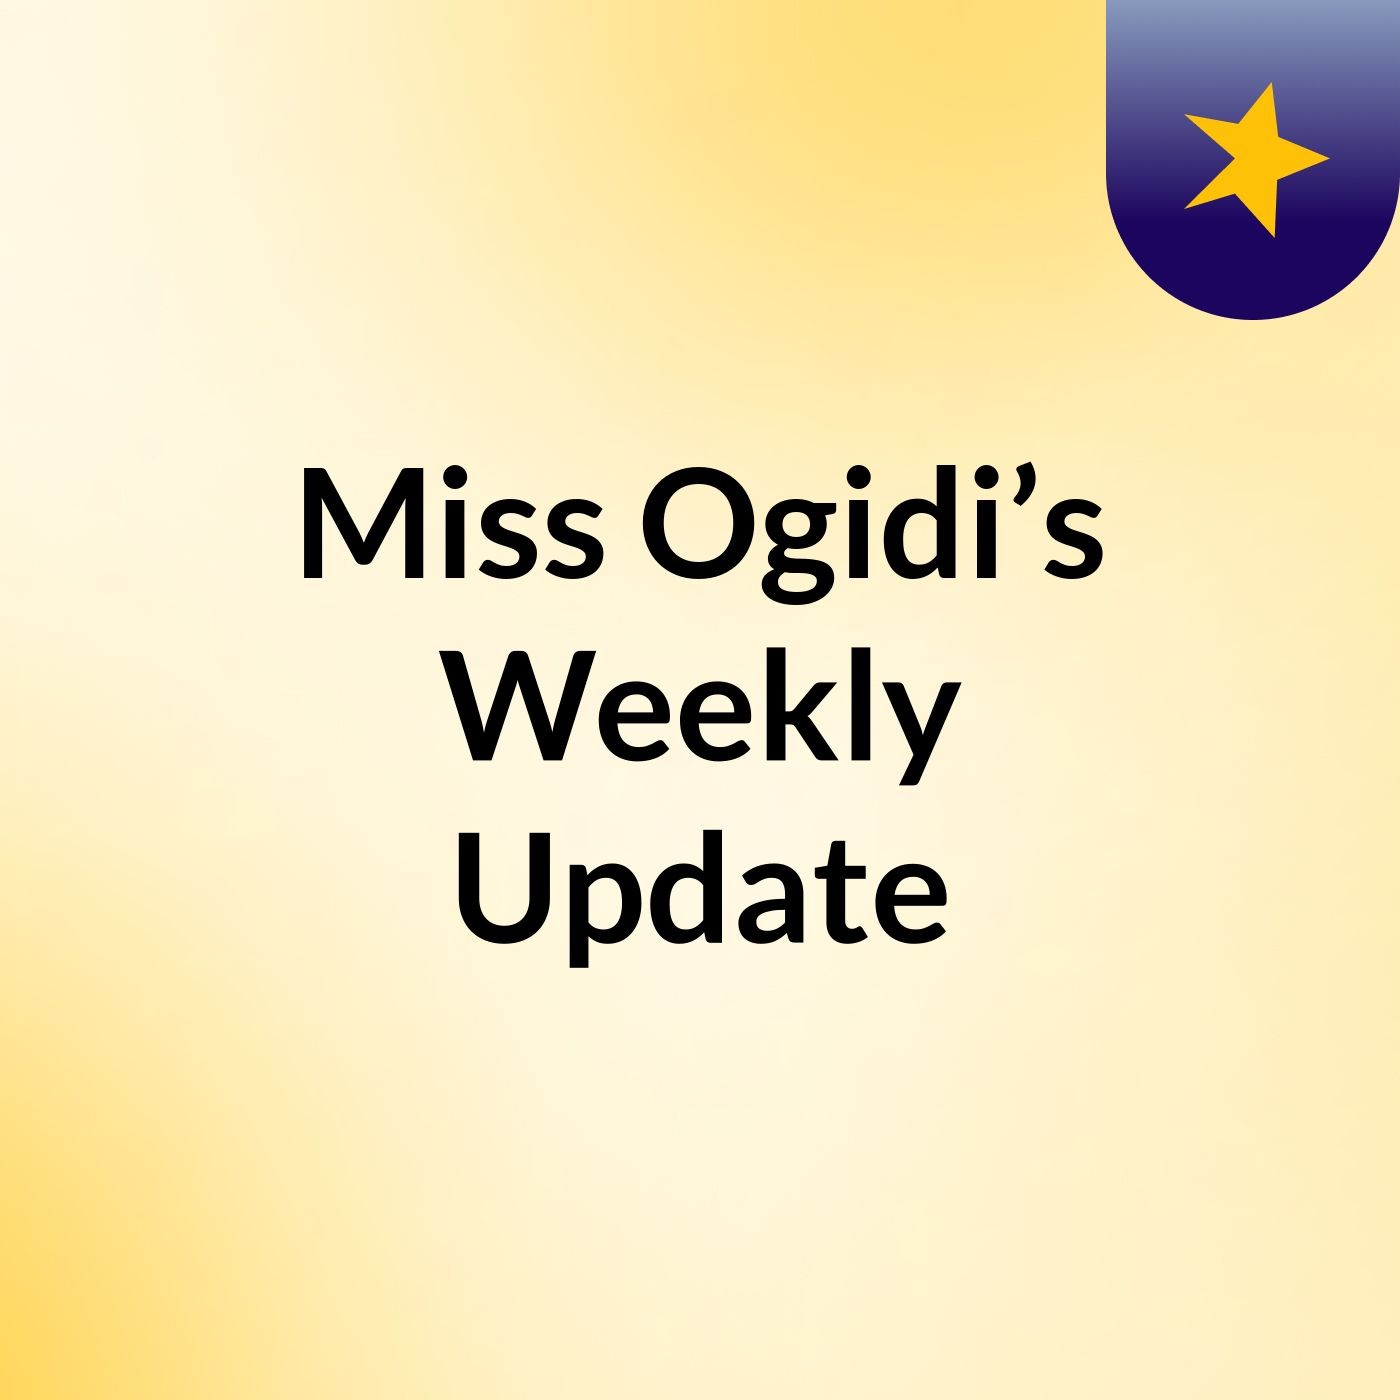 Episode 2 - Miss Ogidi’s Weekly Update